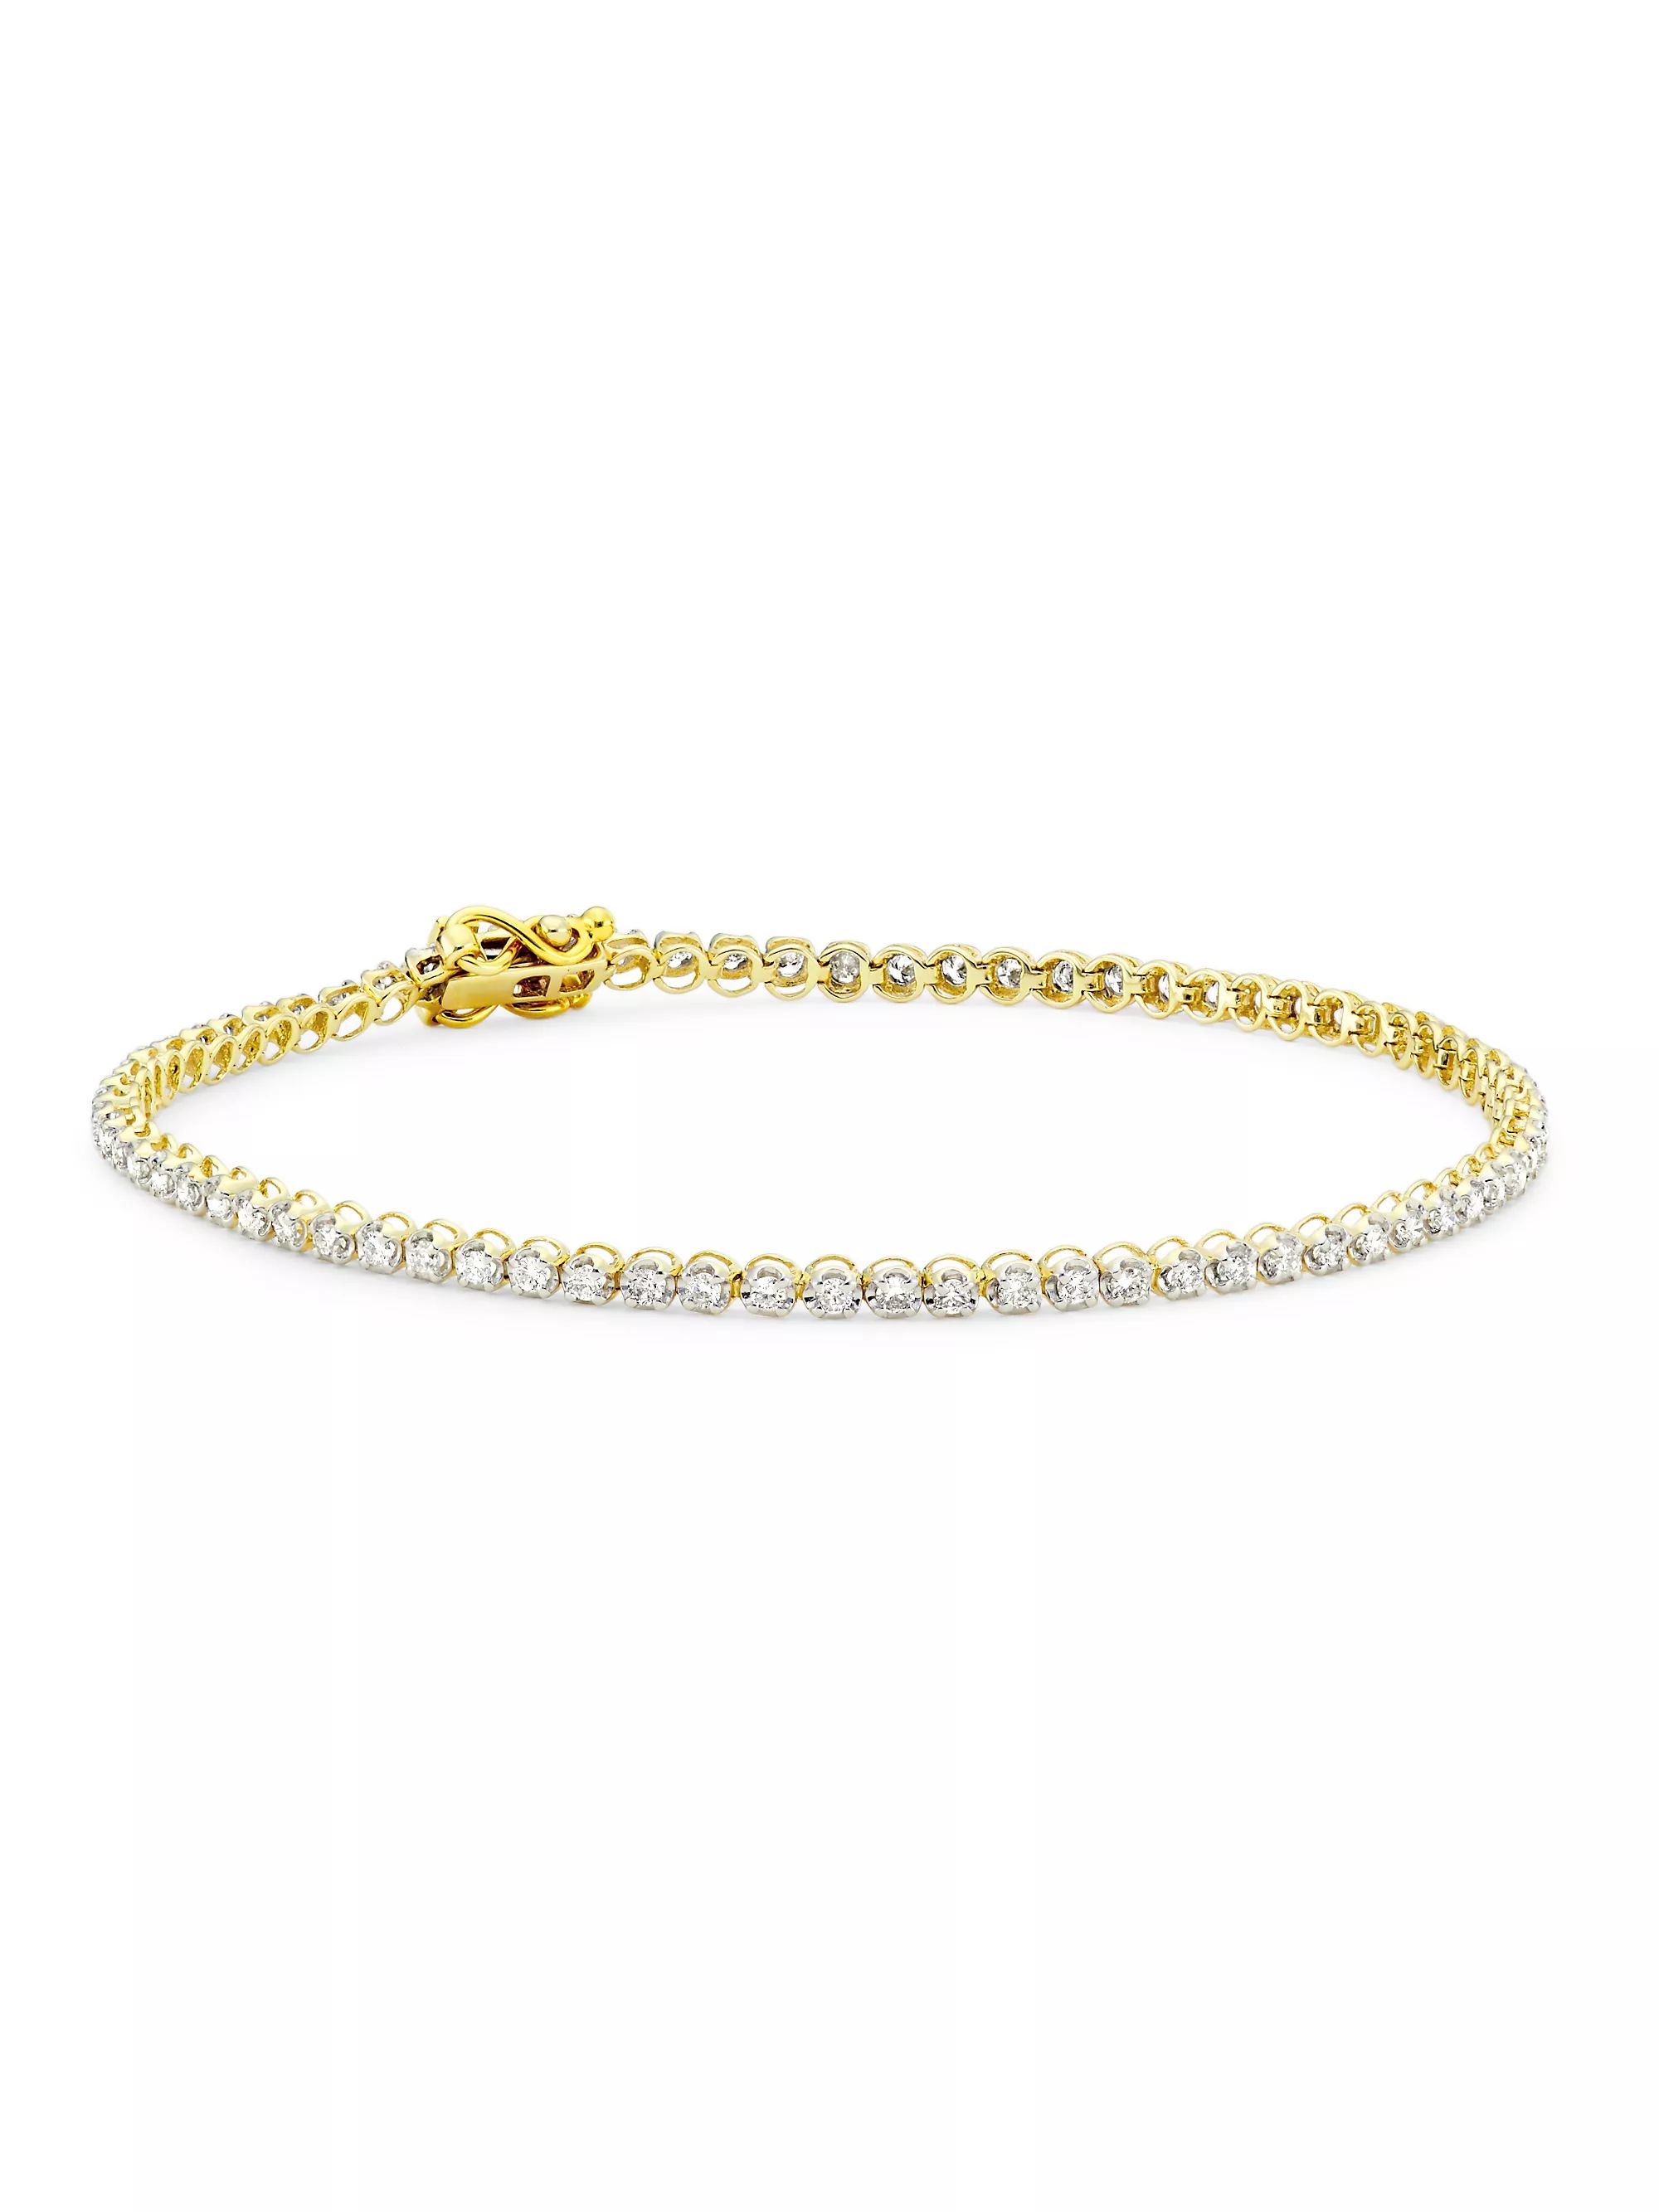 14K Yellow Gold & 1 TCW Diamond Tennis Bracelet | Saks Fifth Avenue